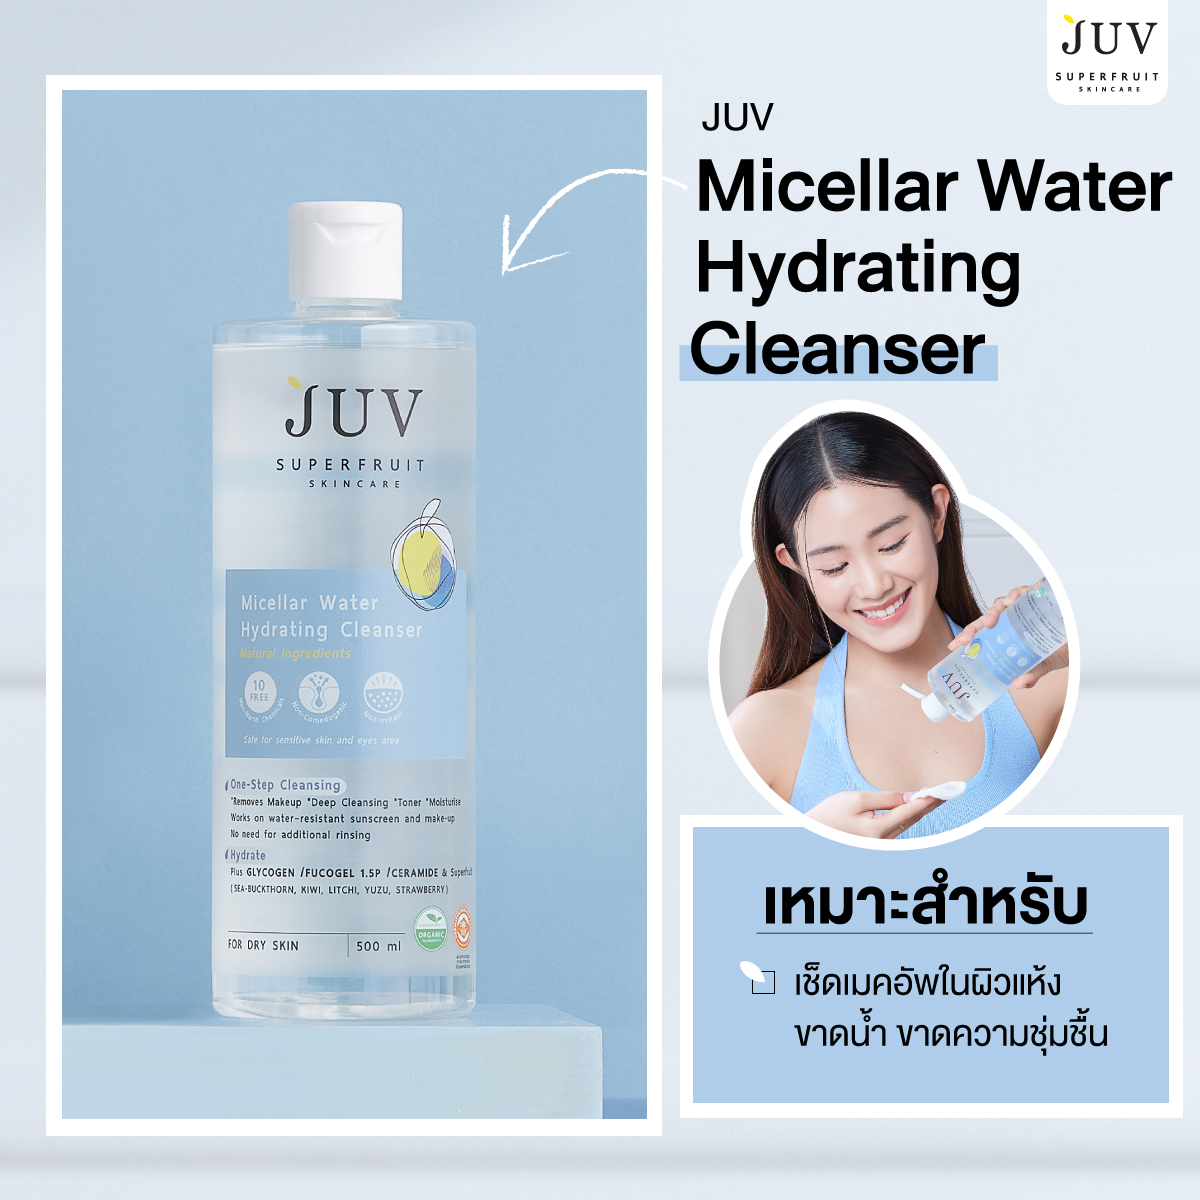 JUV Micellar Water Hydrating Cleanser  ไมเซลล่าบำรุงผิวขาดน้ำ สูตรสีฟ้า